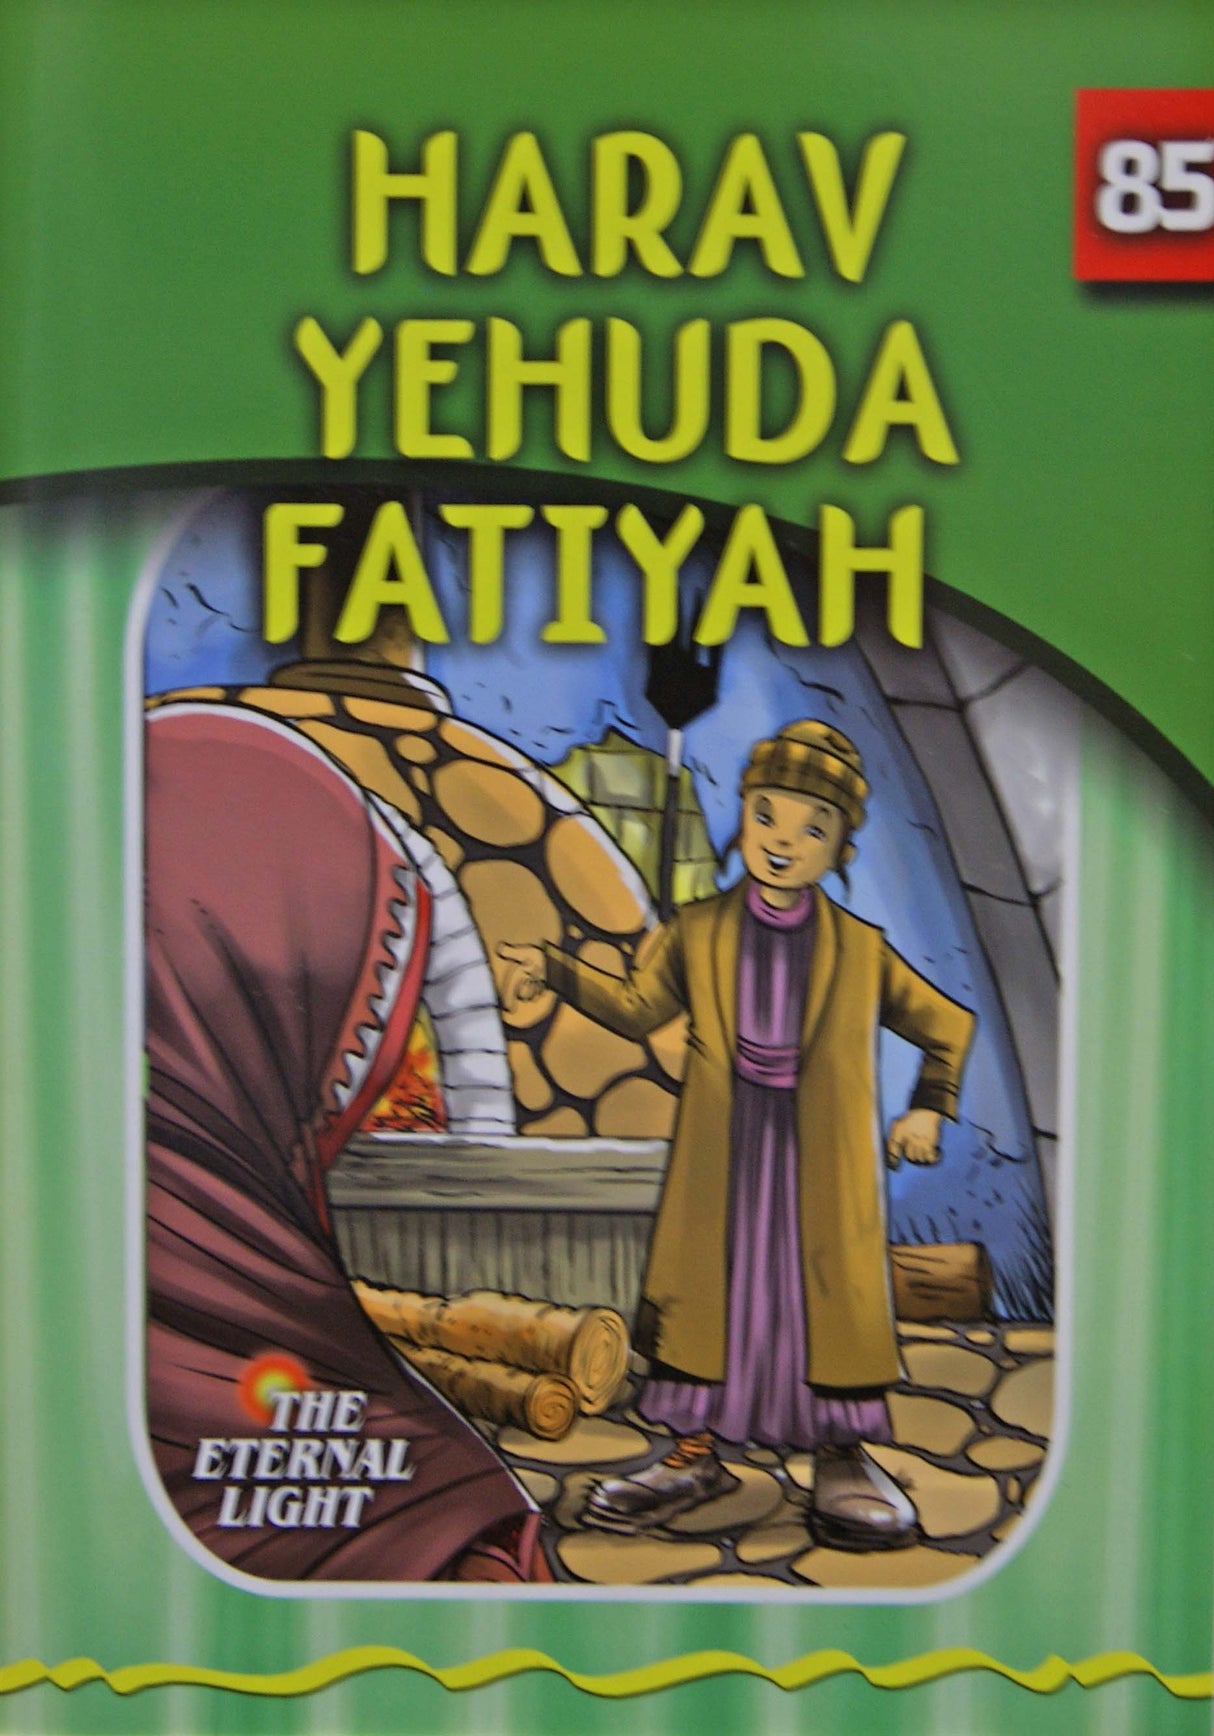 Harav Yehuda Fatiyah (Eternal Light Series 85)